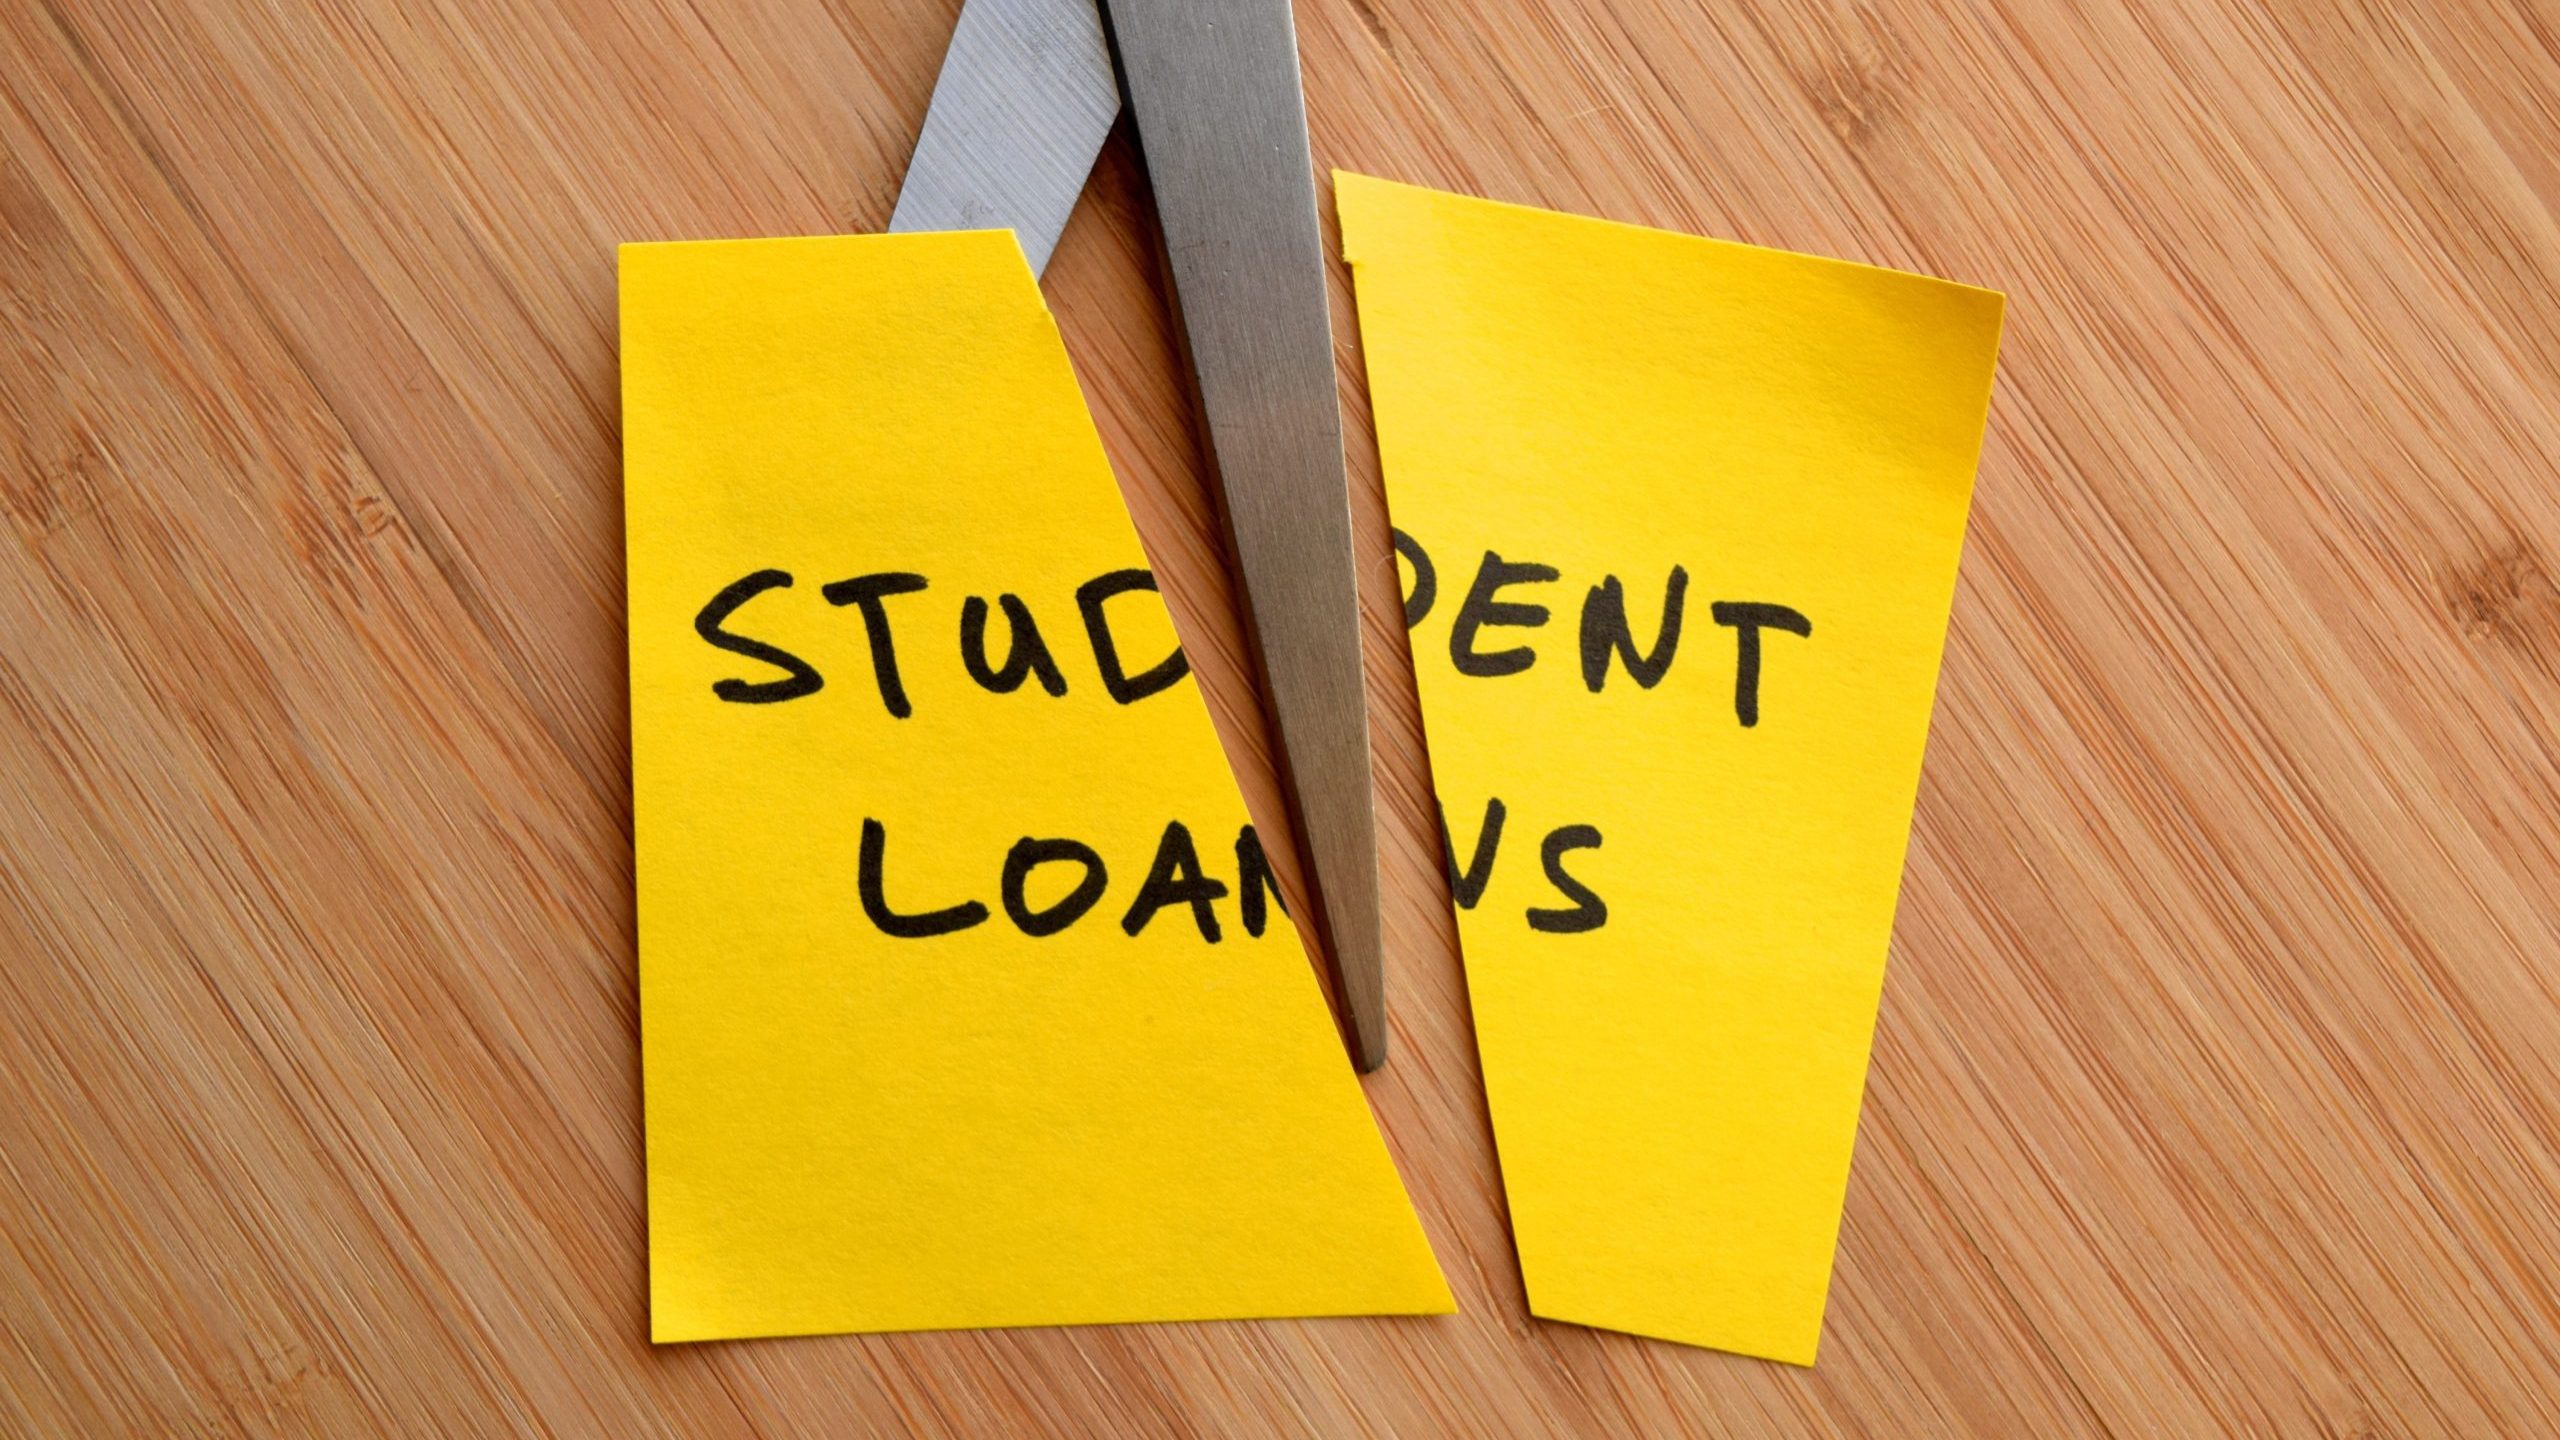 'Student loans' on post-it note cut by scissors